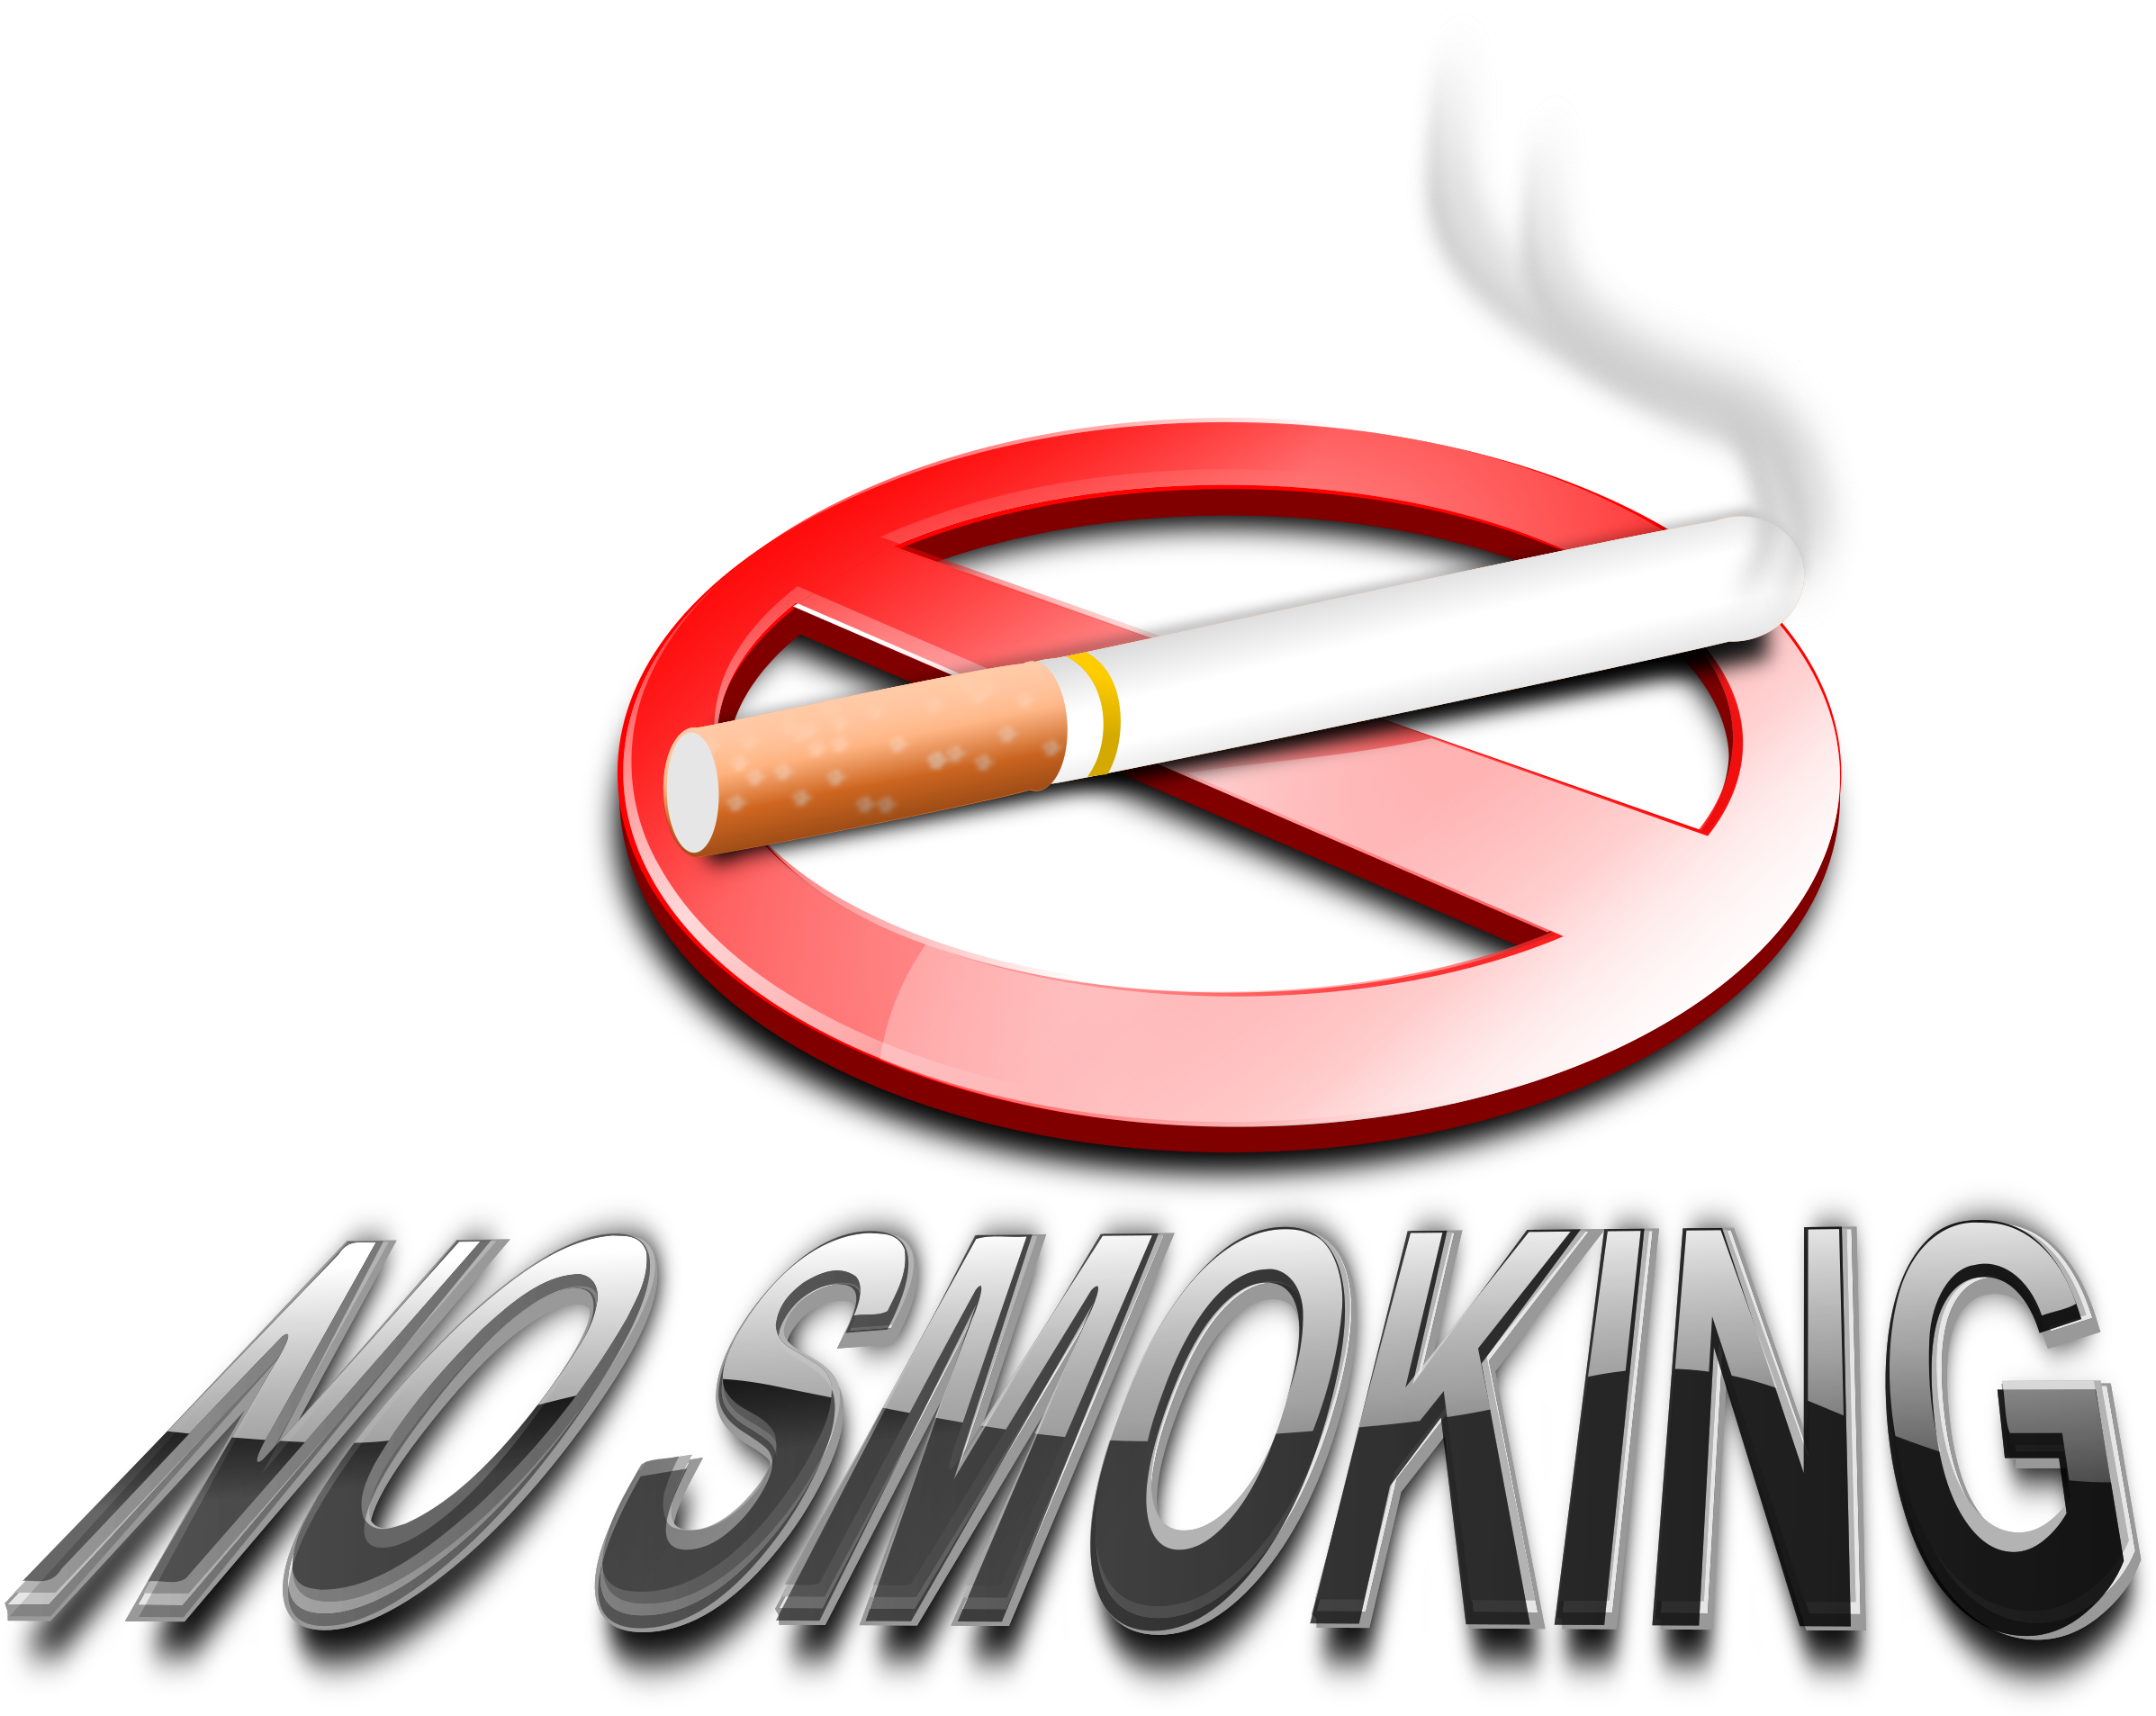 Smoking - No Smoking Photos Download (2400x1933)